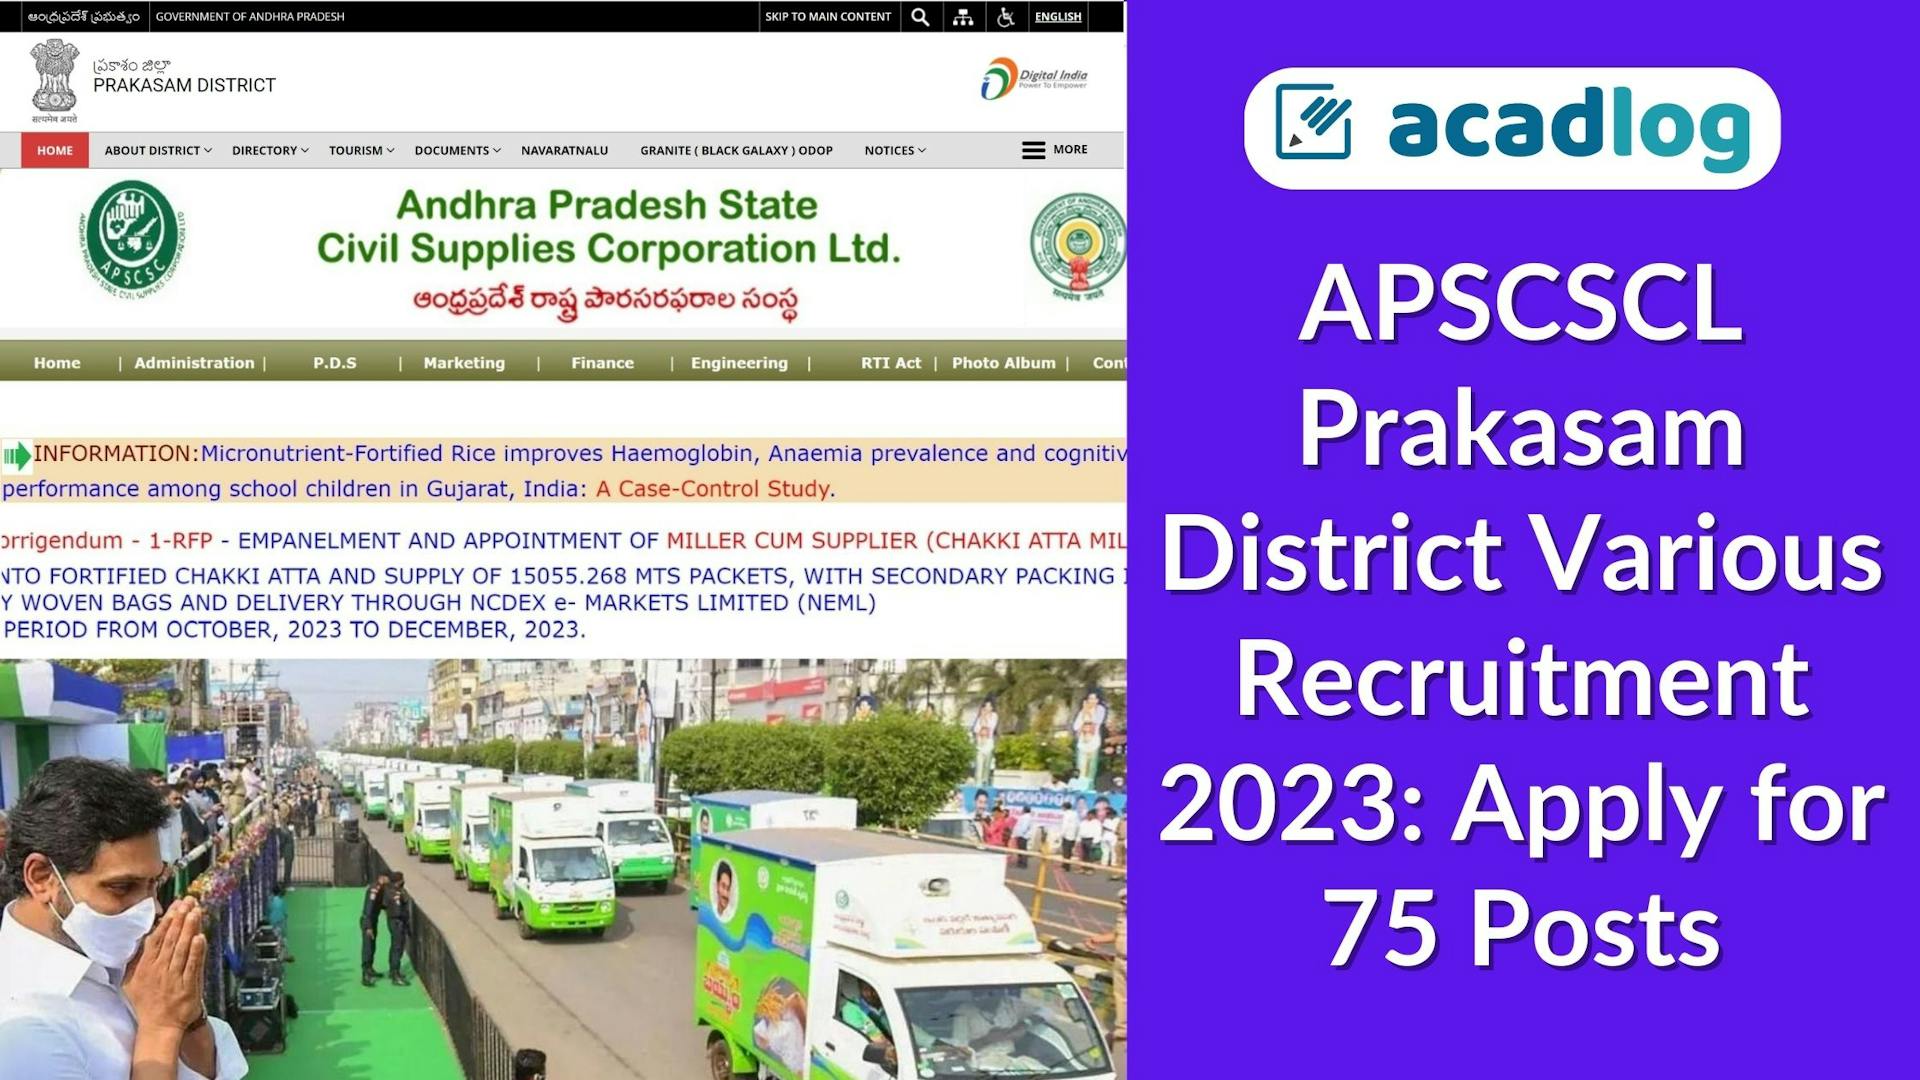 APSCSCL Prakasam District Various Recruitment 2023: Apply for 75 Posts